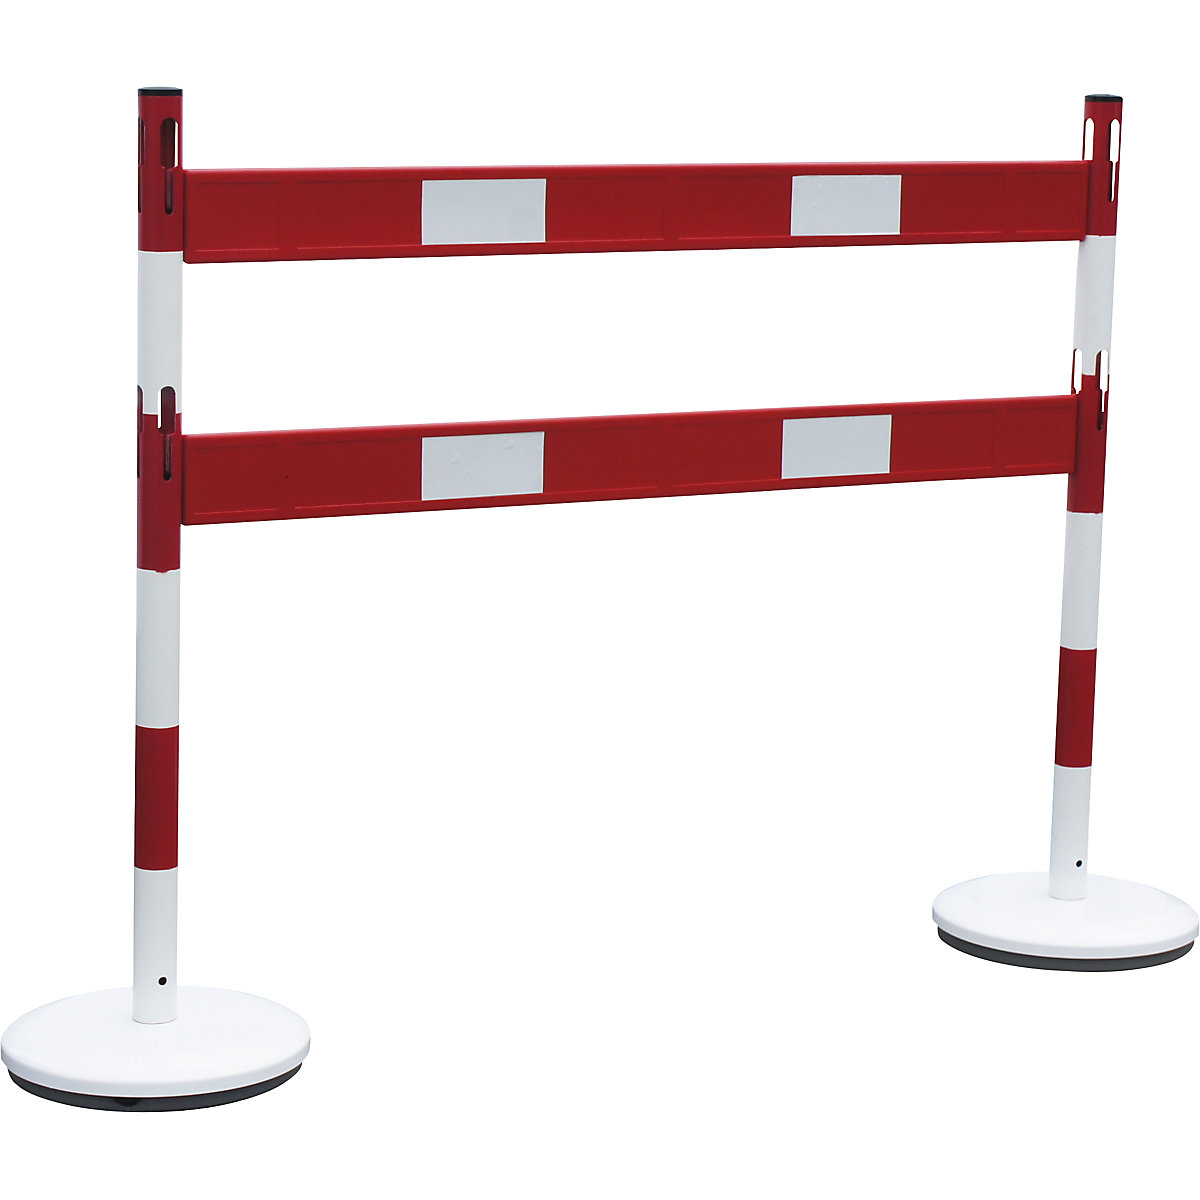 Barrier post set with rails - VISO